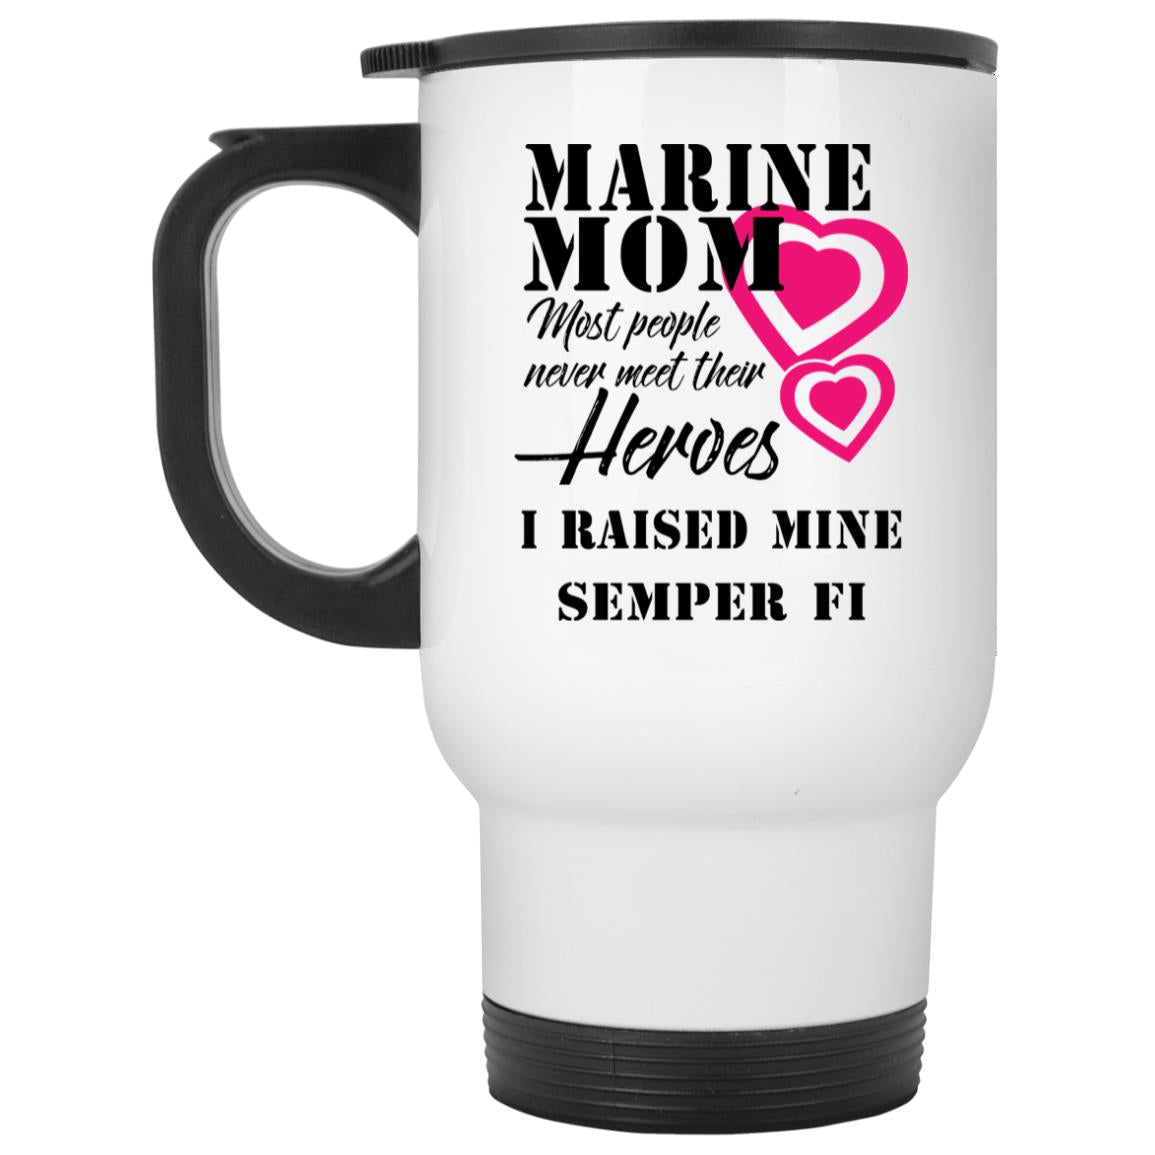 Marine Mom I Raised My Hero Semper Fi 14oz Stainless Steel Travel Mug